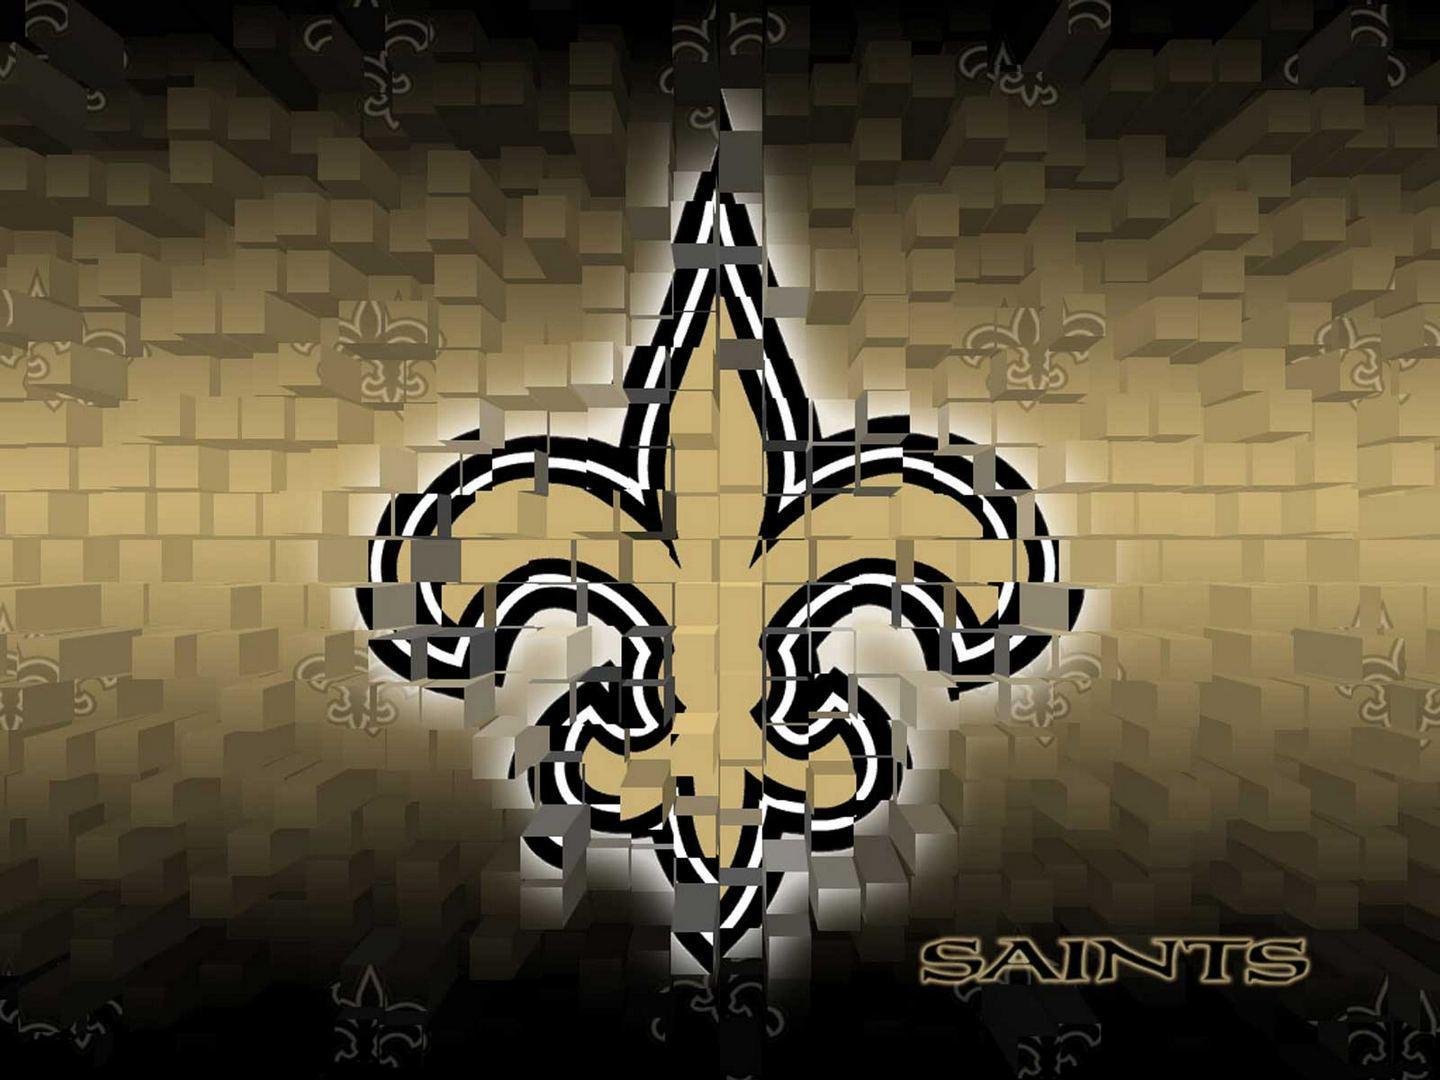 New Orleans Saints wallpaper HD free download